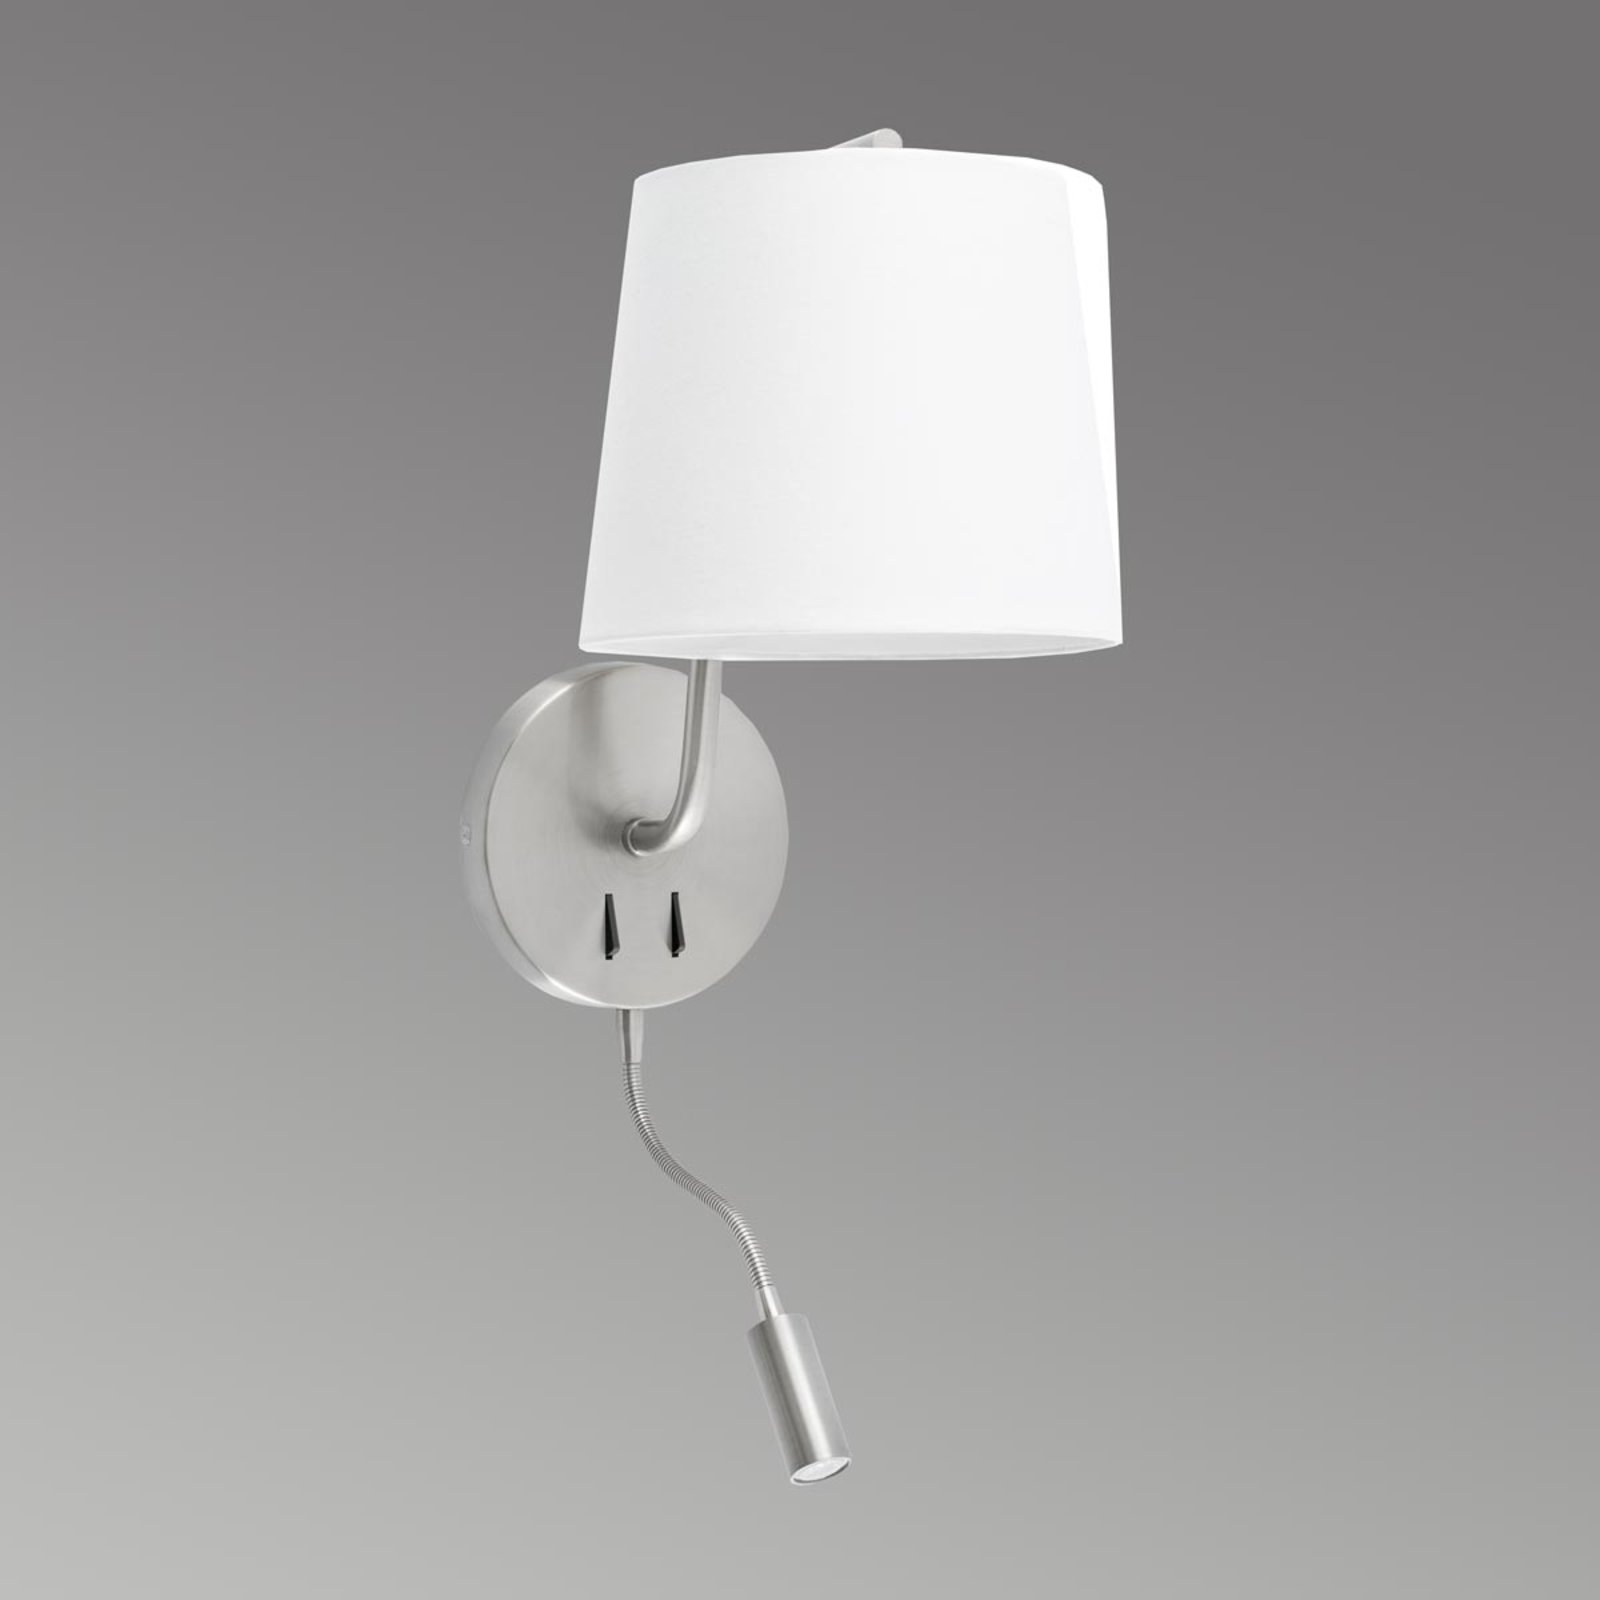 Textiel-wandlamp Berni met LED leeslampje